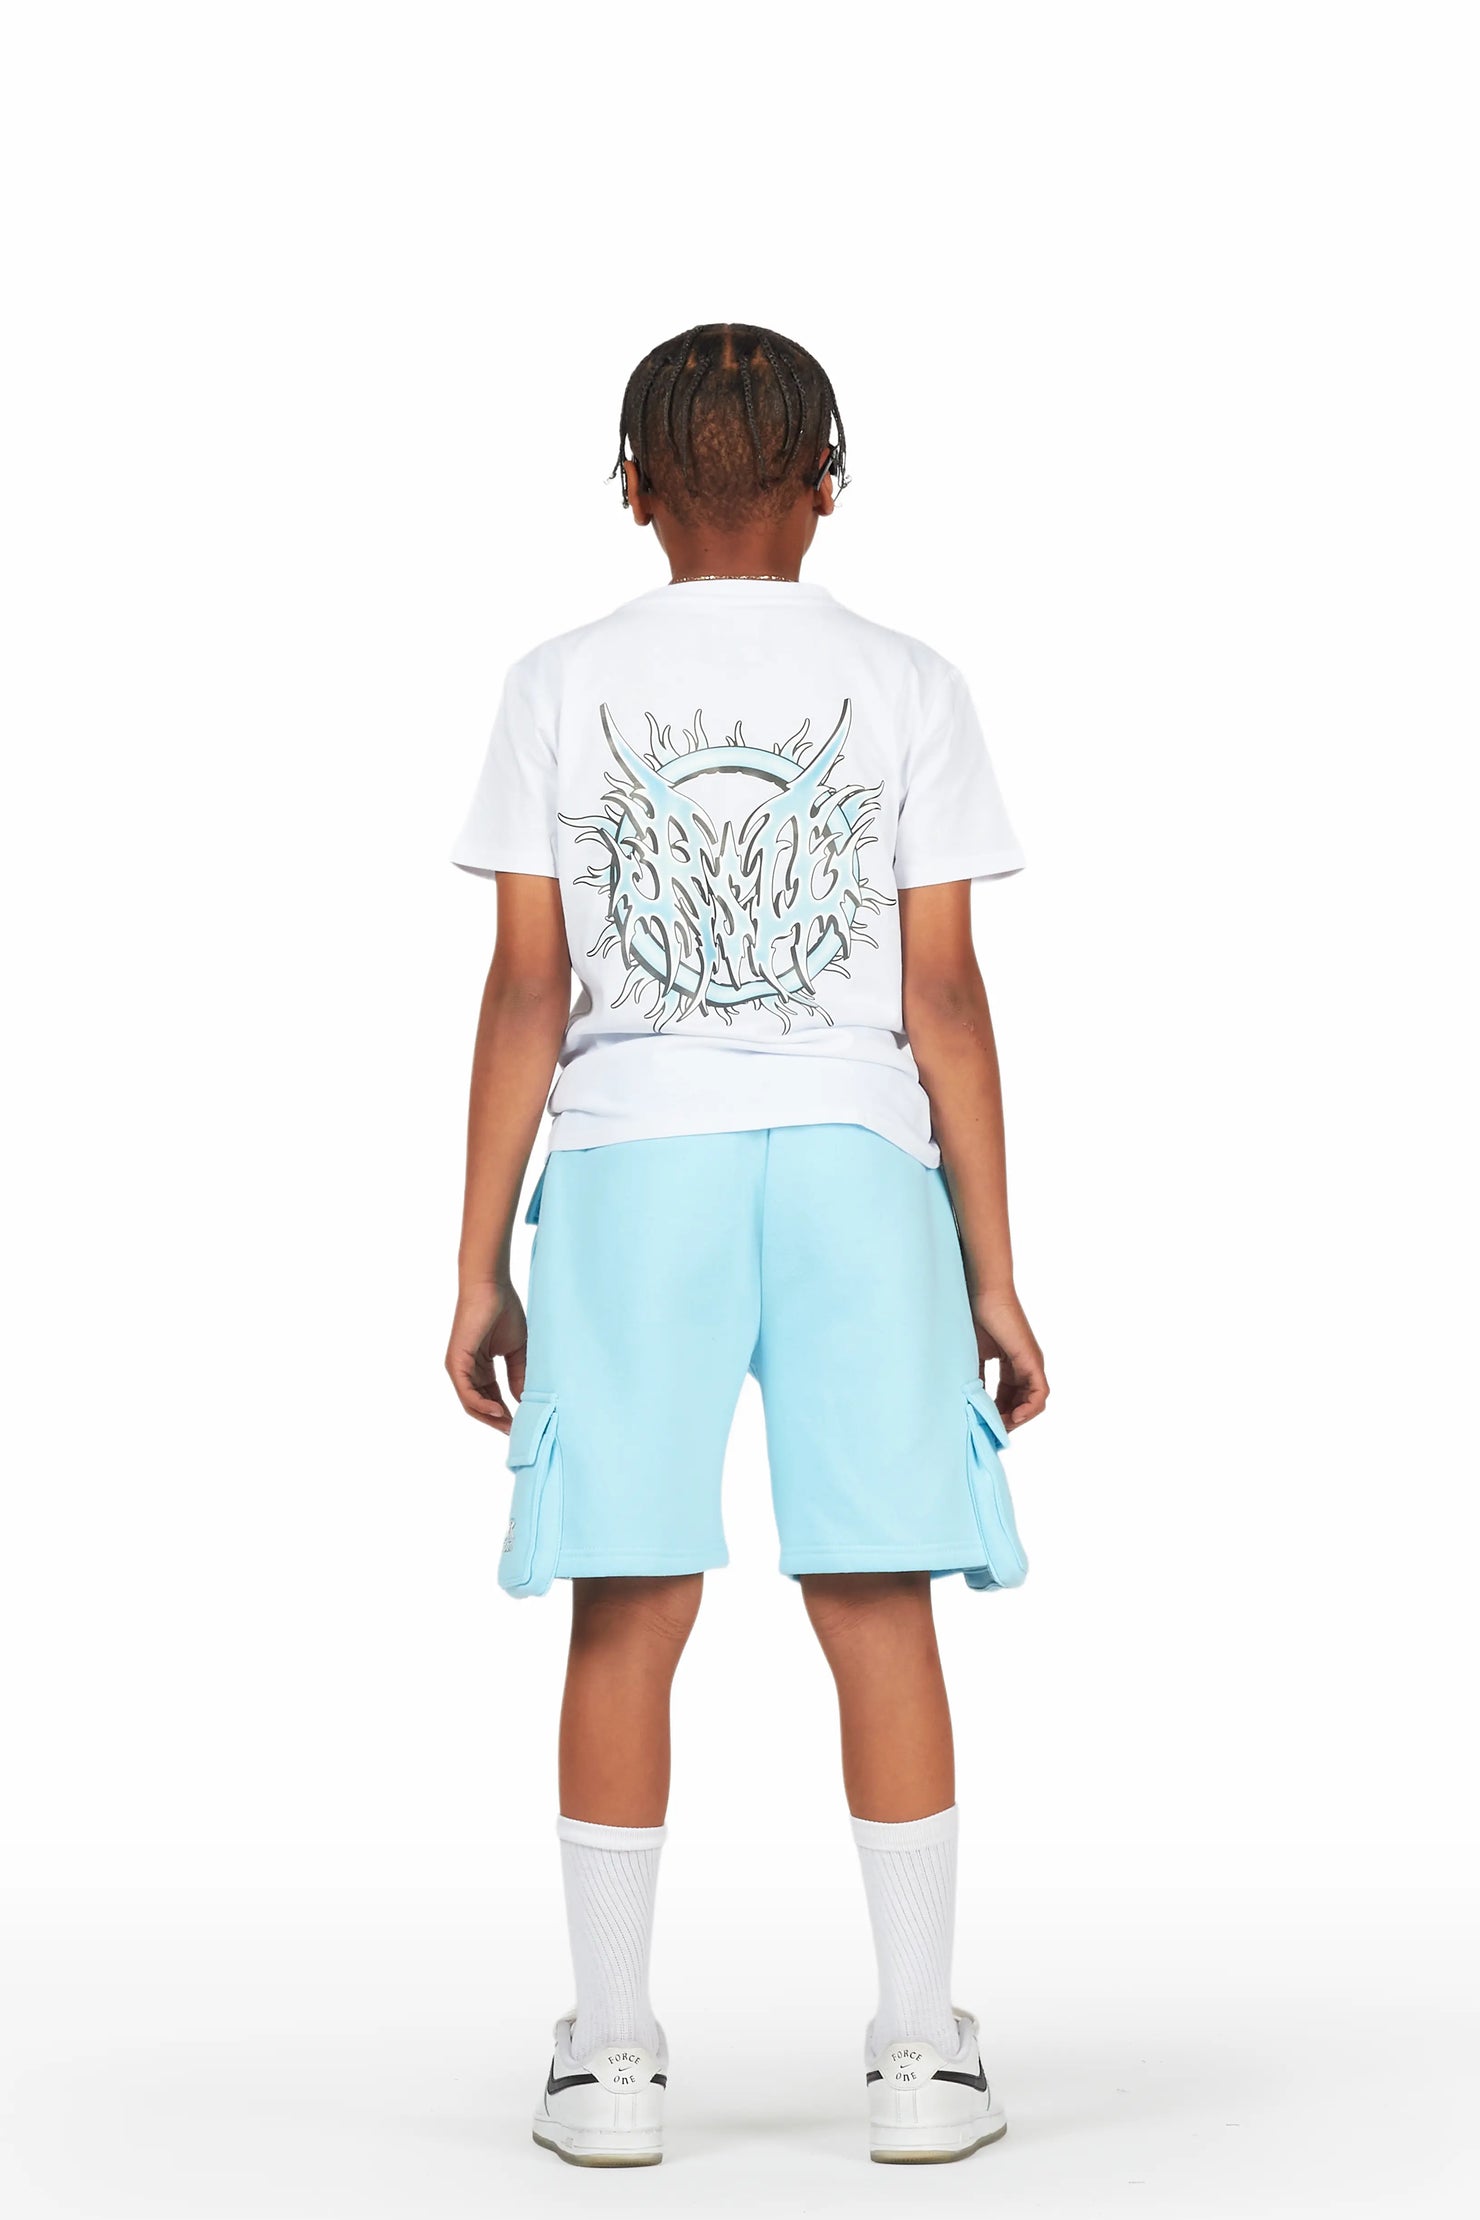 Boys Yoga White/Blue T-Shirt Short Set